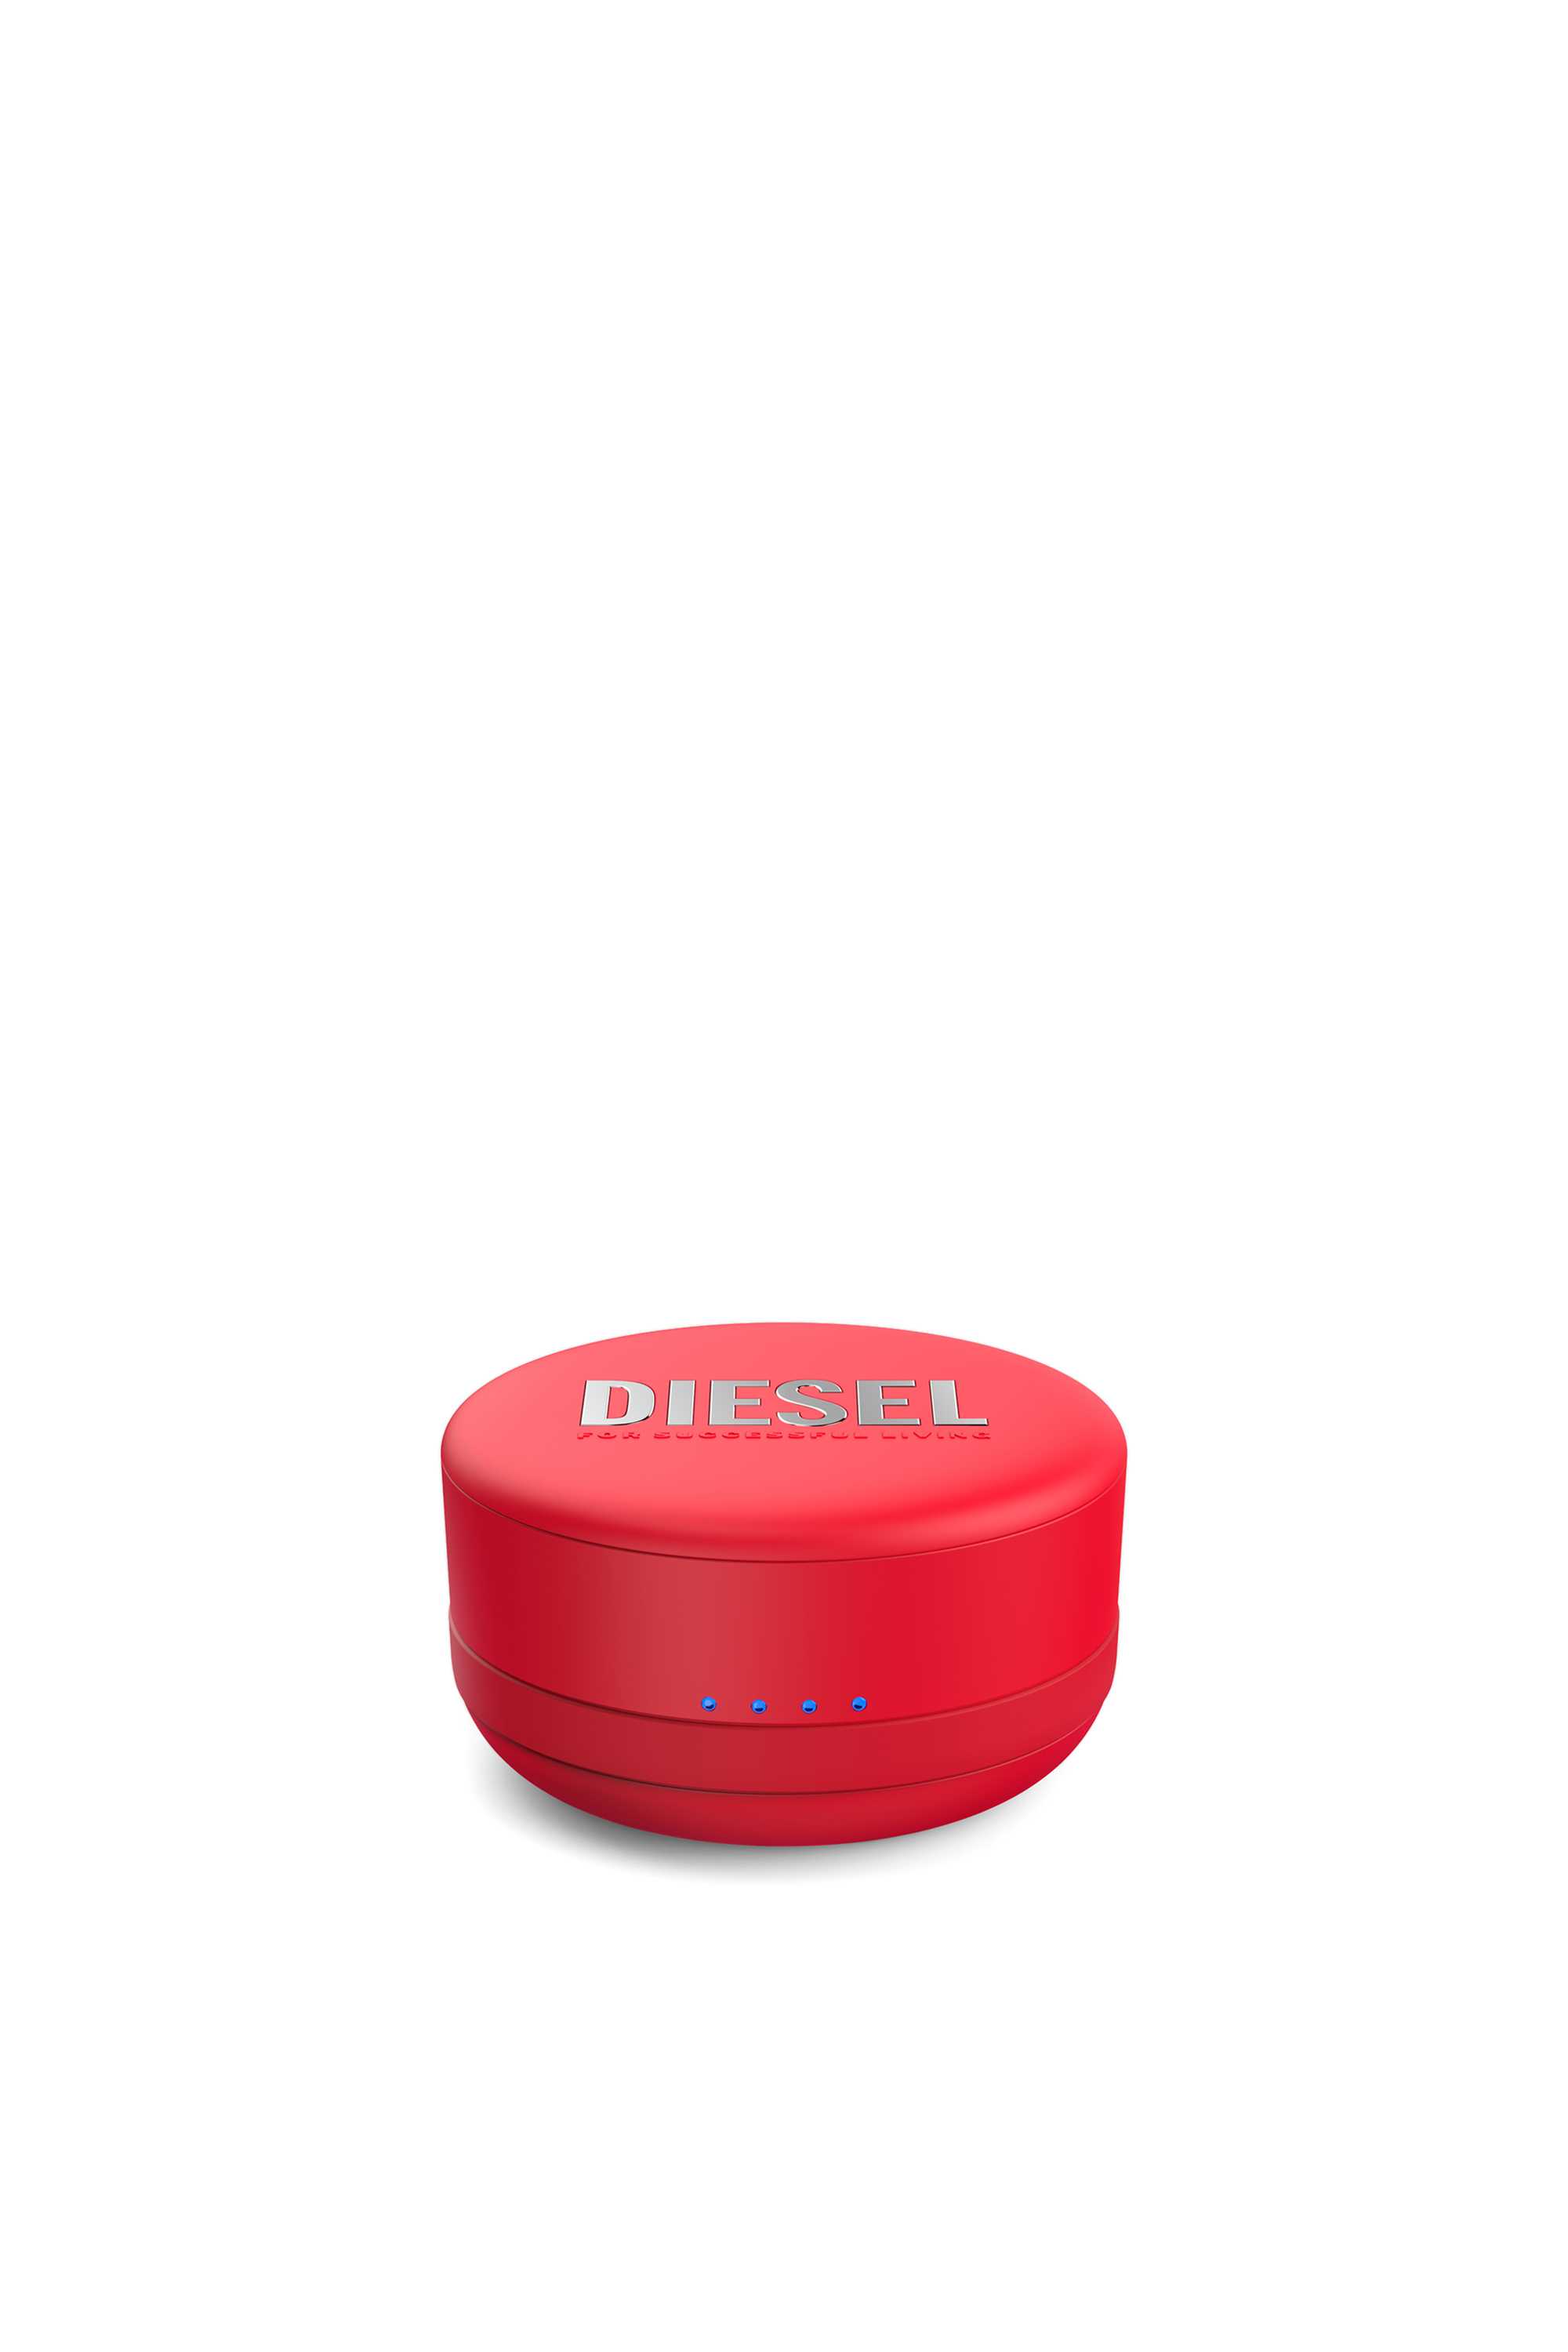 Diesel - 45476 TRUE WIRELESS, Red - Image 4